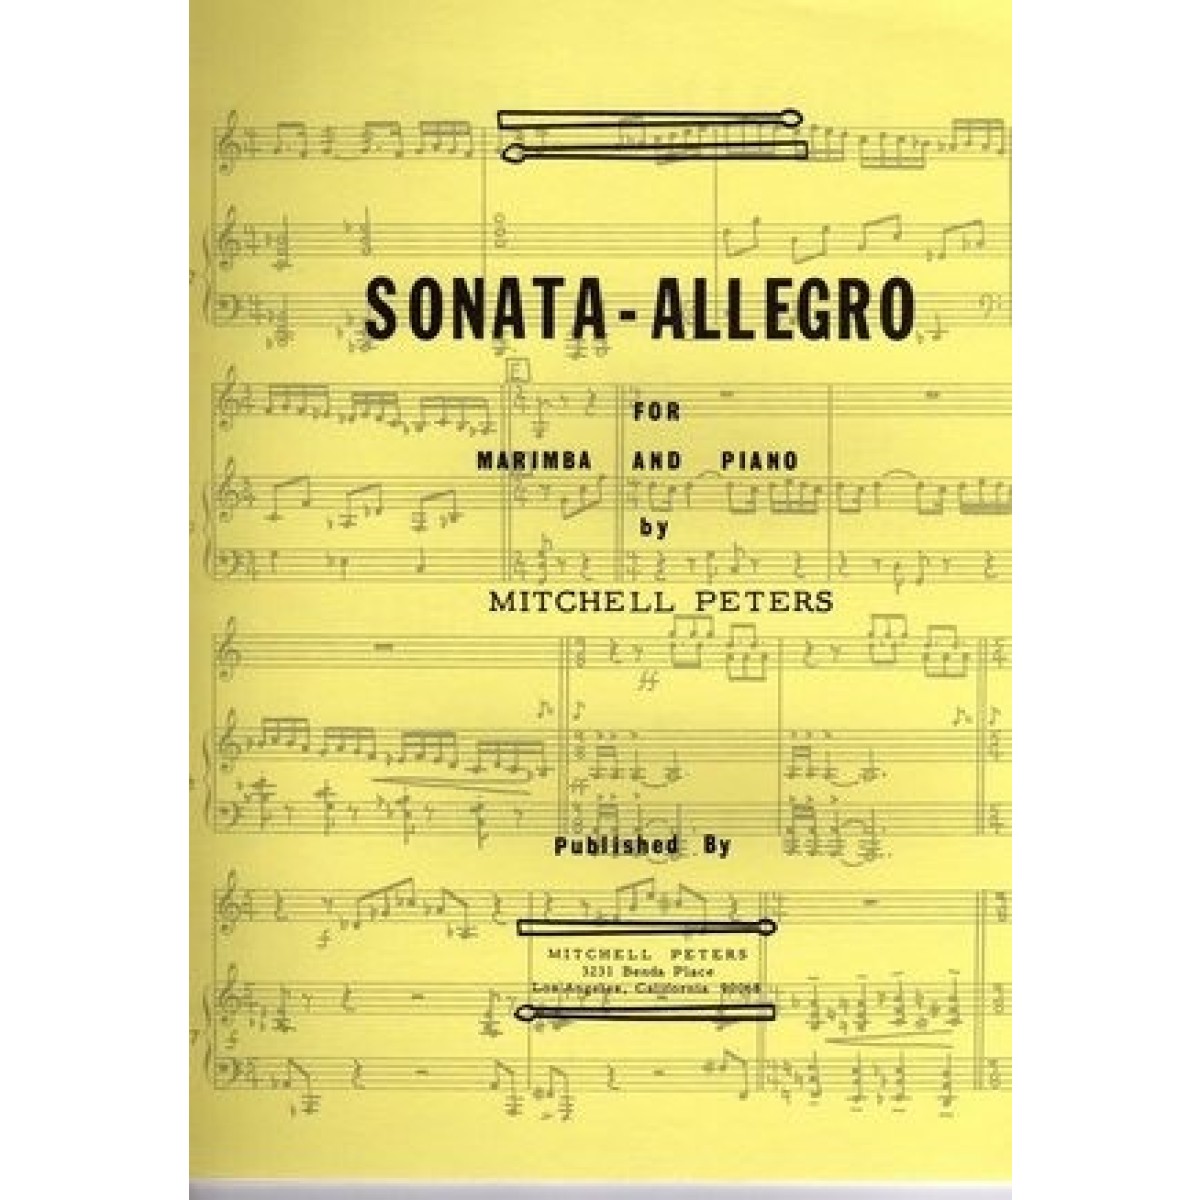 Sonata - Allegro by Mitchell Peters